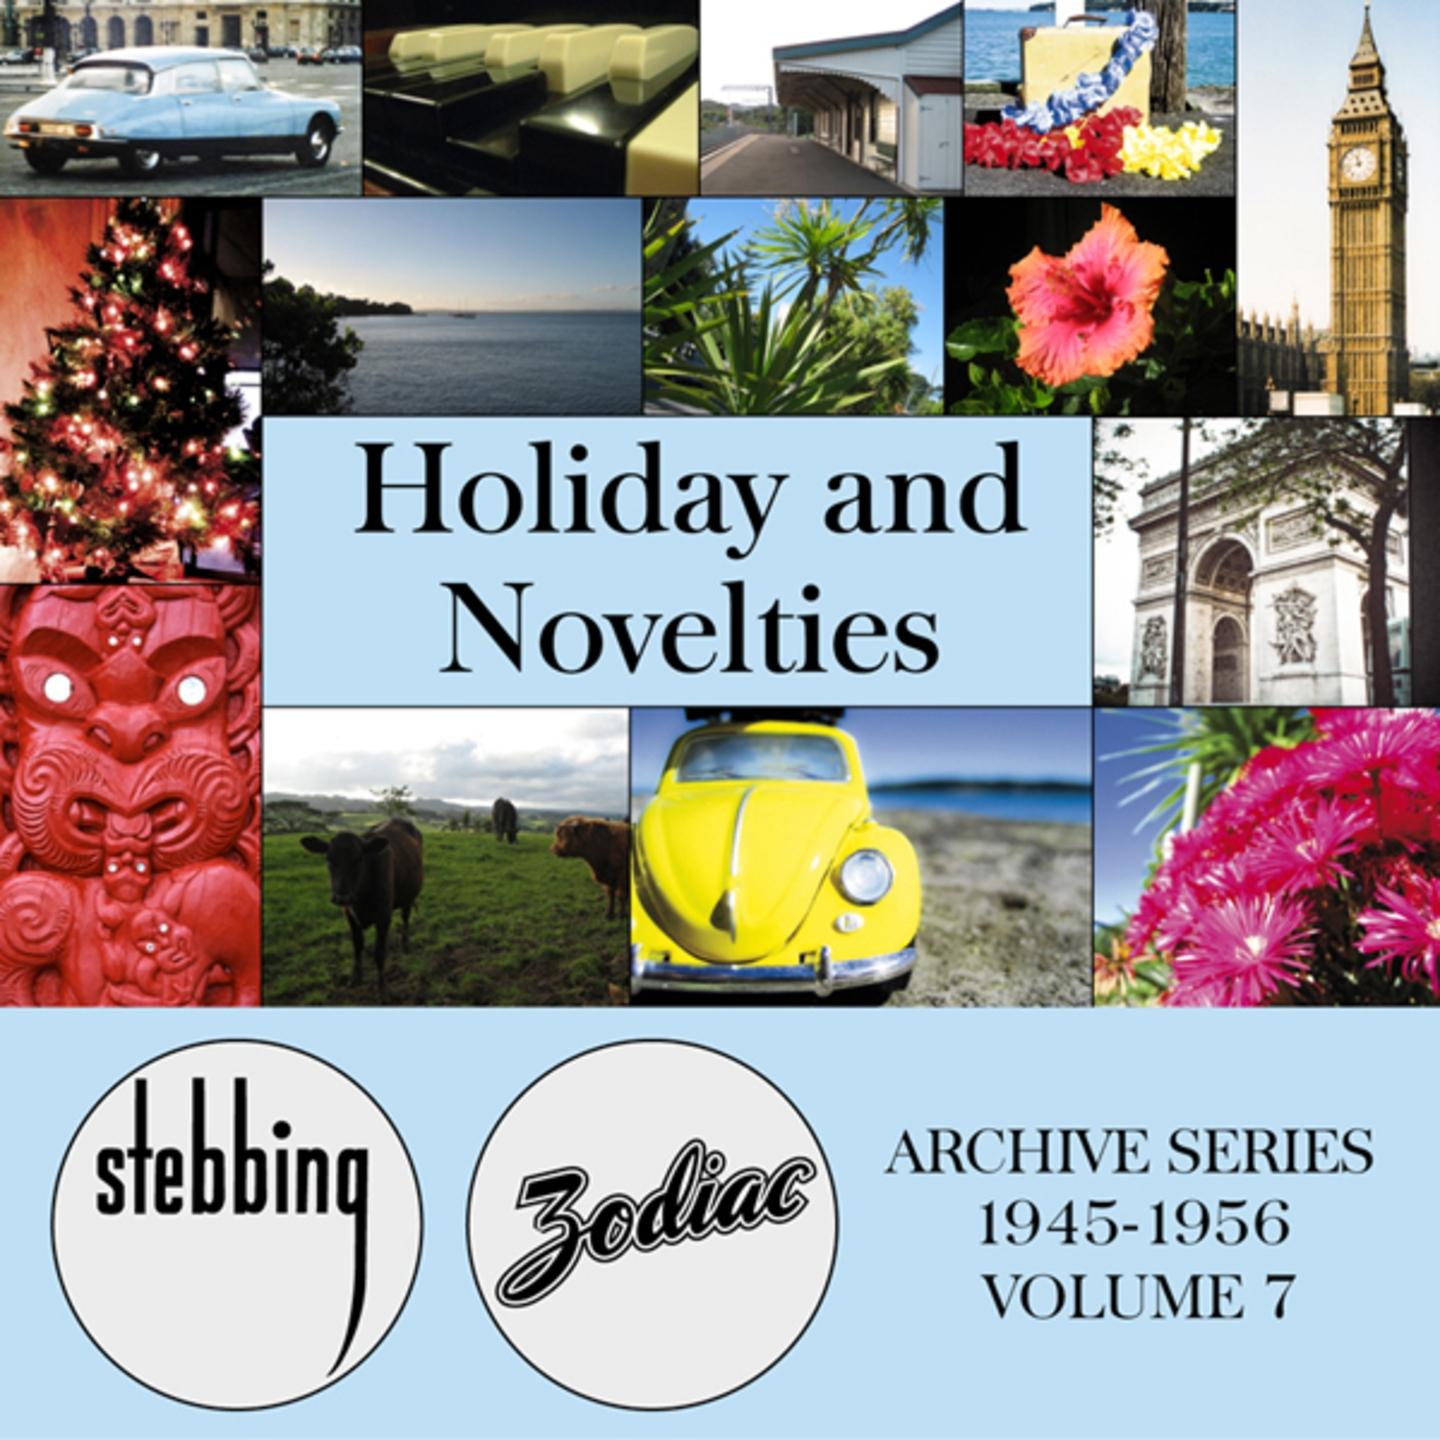 Zodiac Archive Series, Vol. 7: Holidays and Novelties (1945-1956)